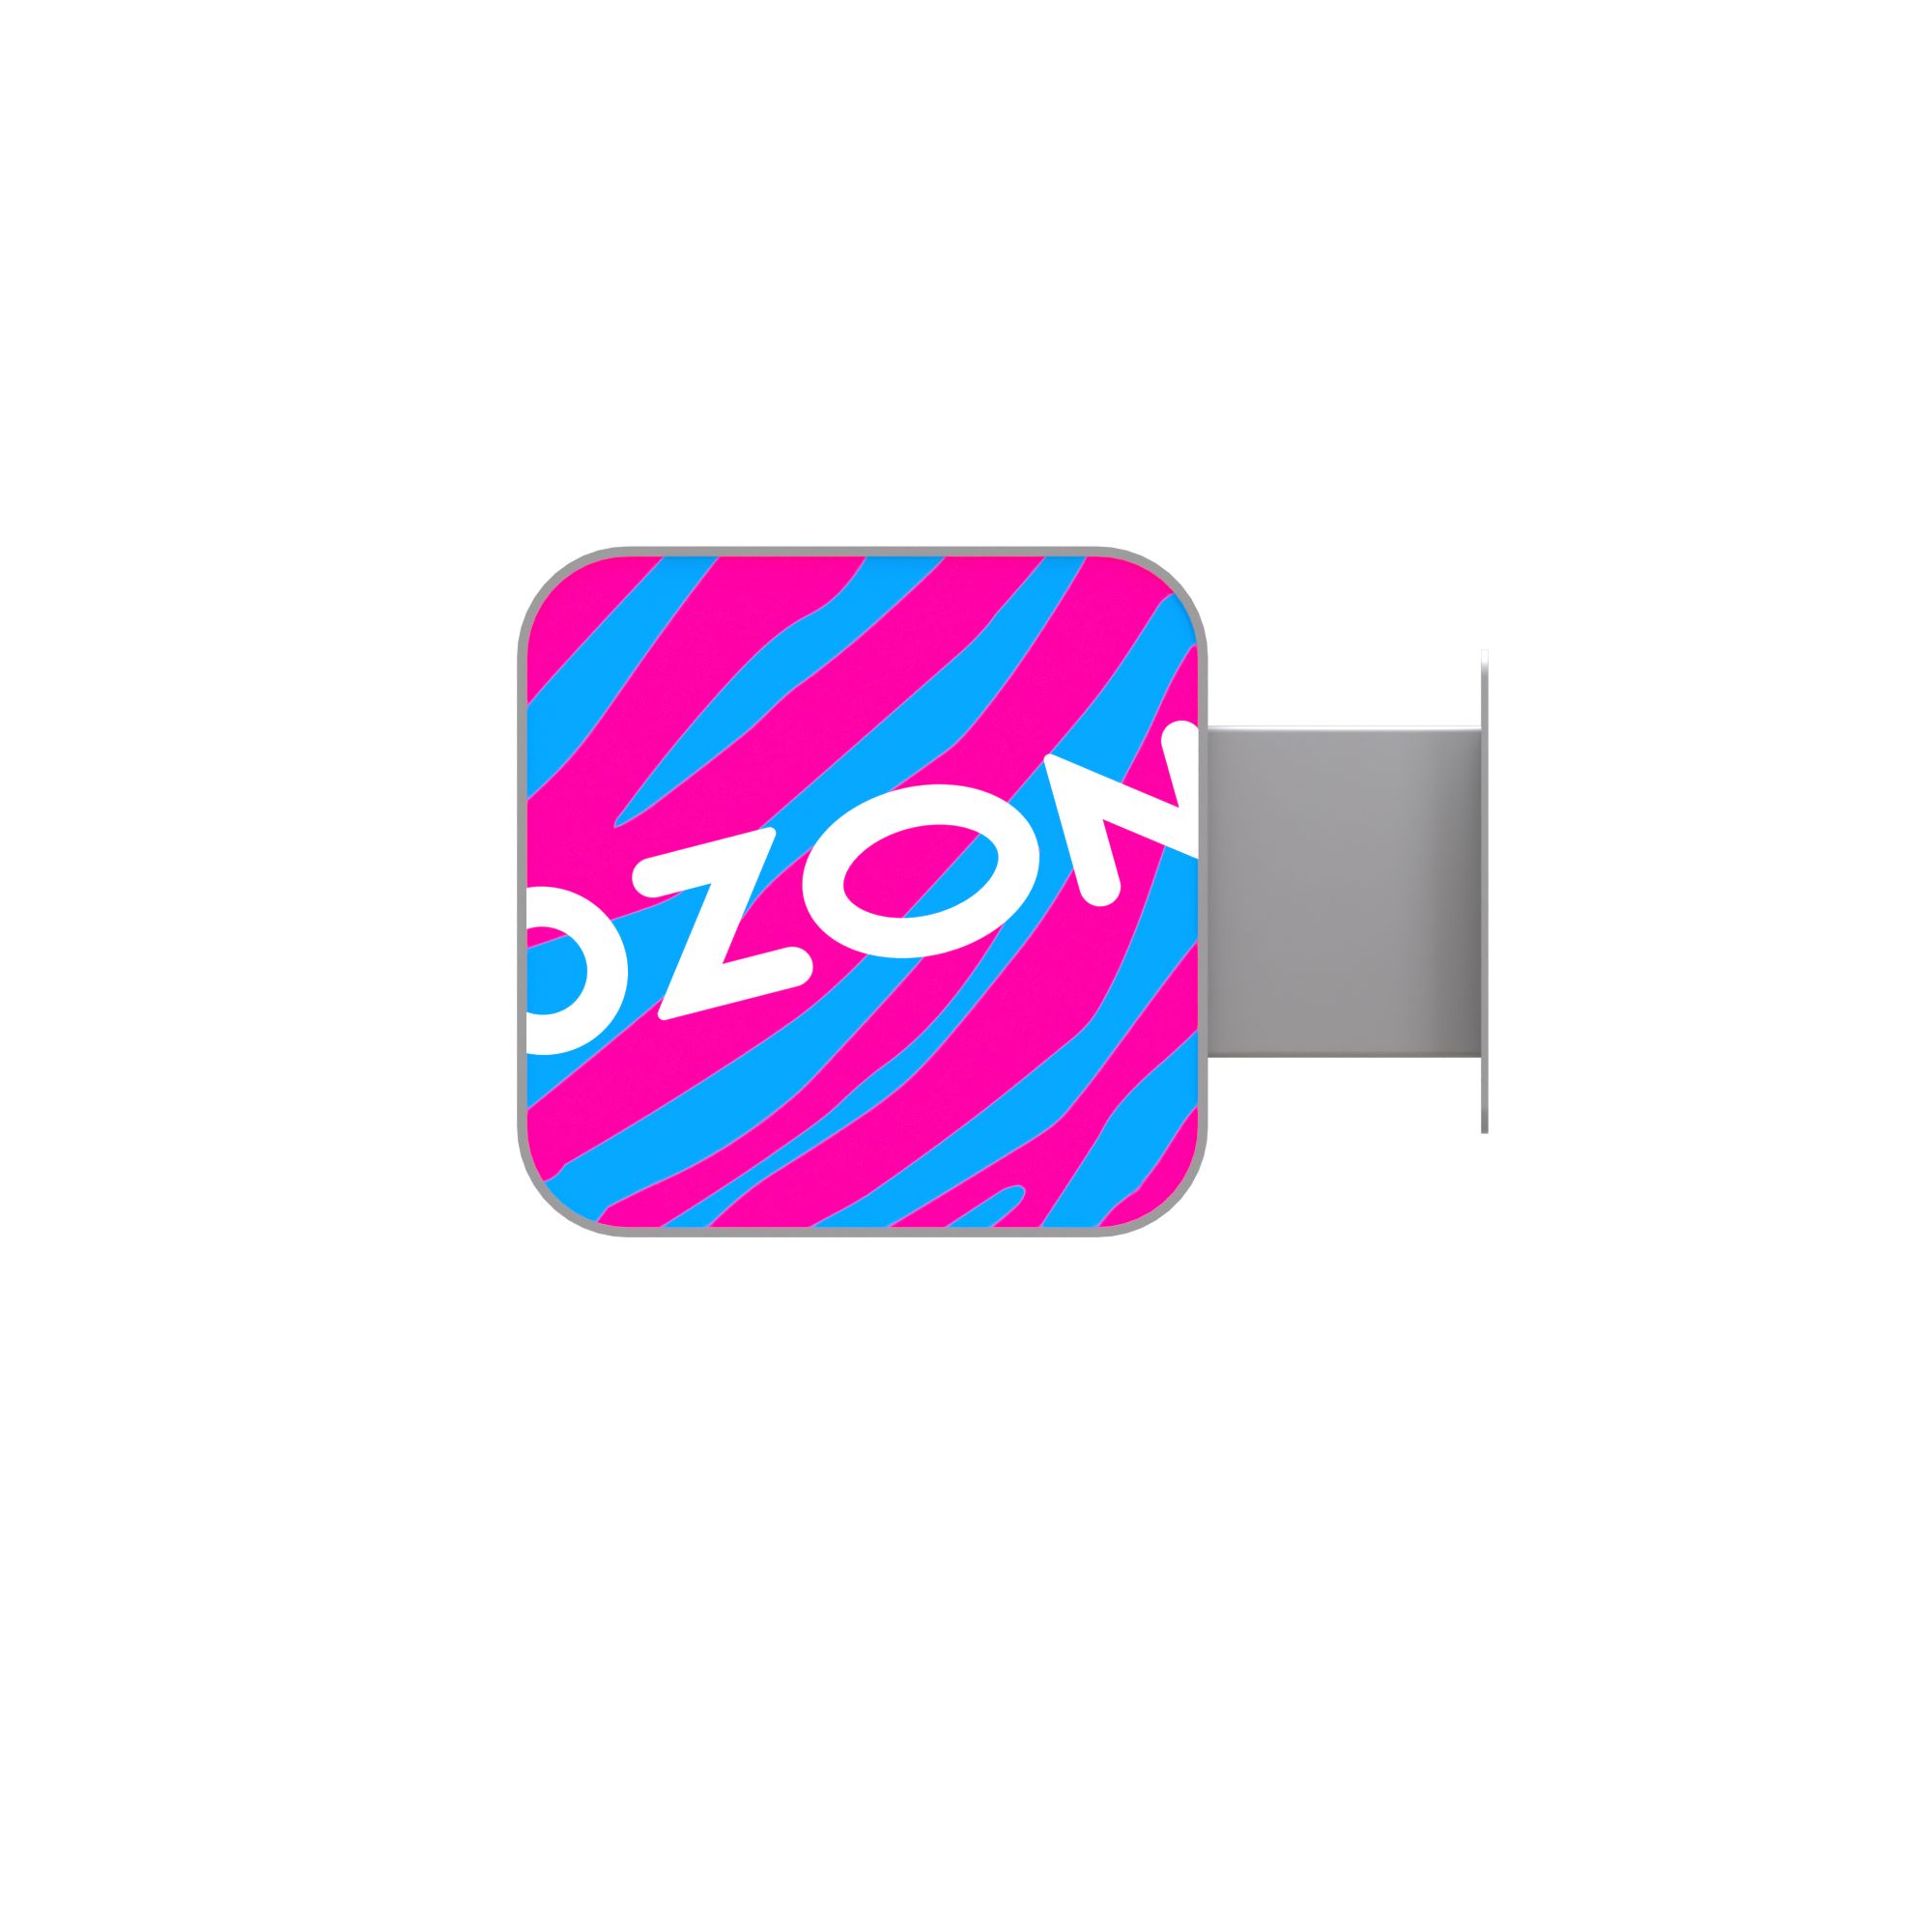 Панель кронштейн OZON. Панель кронштейн Озон Зебра. Кронштейн Озон вывеска. Озон лого Зебра.